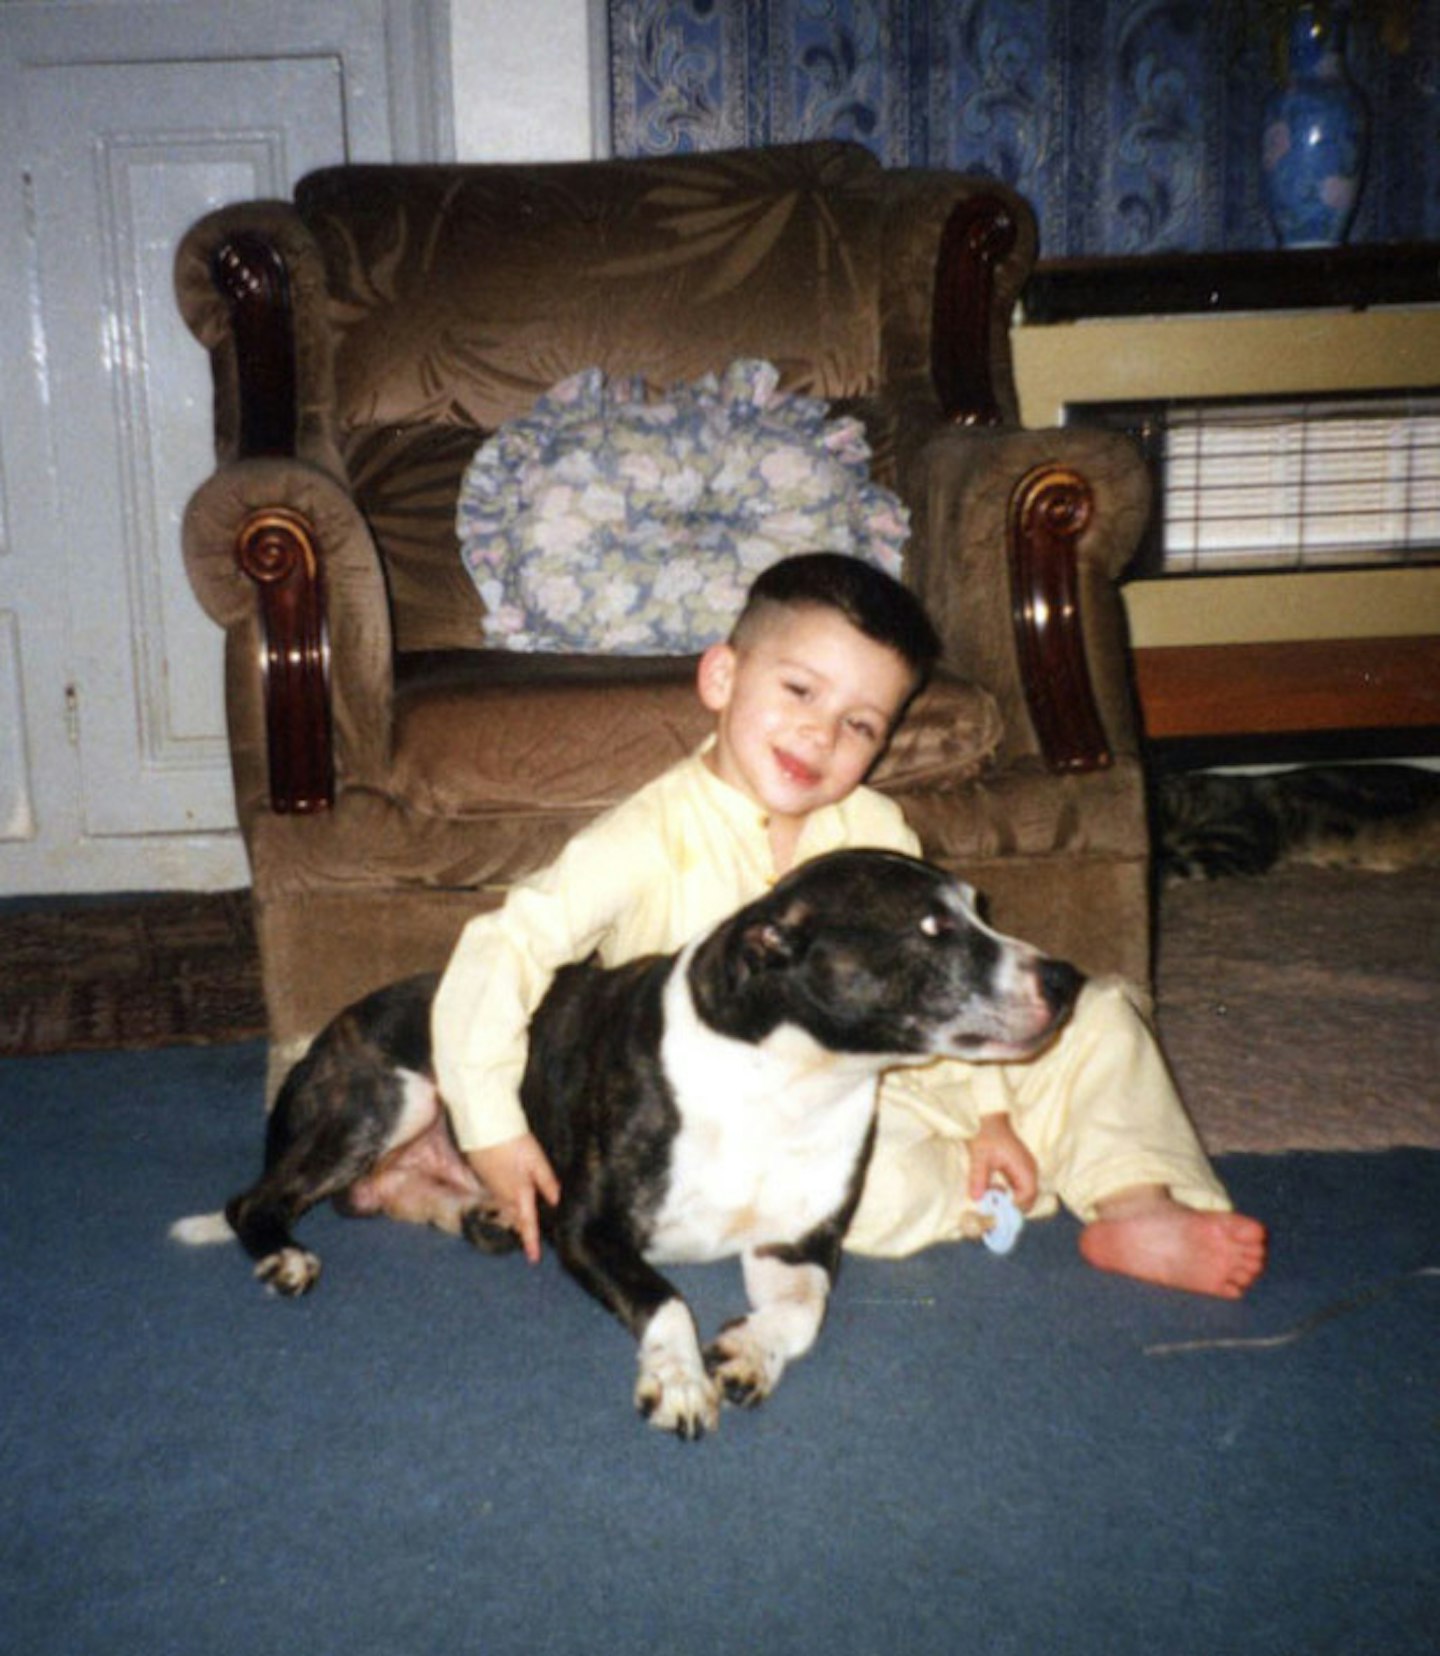 BONUS, BONUS PICTURE: Zayn as a super-cute kid with a dog!